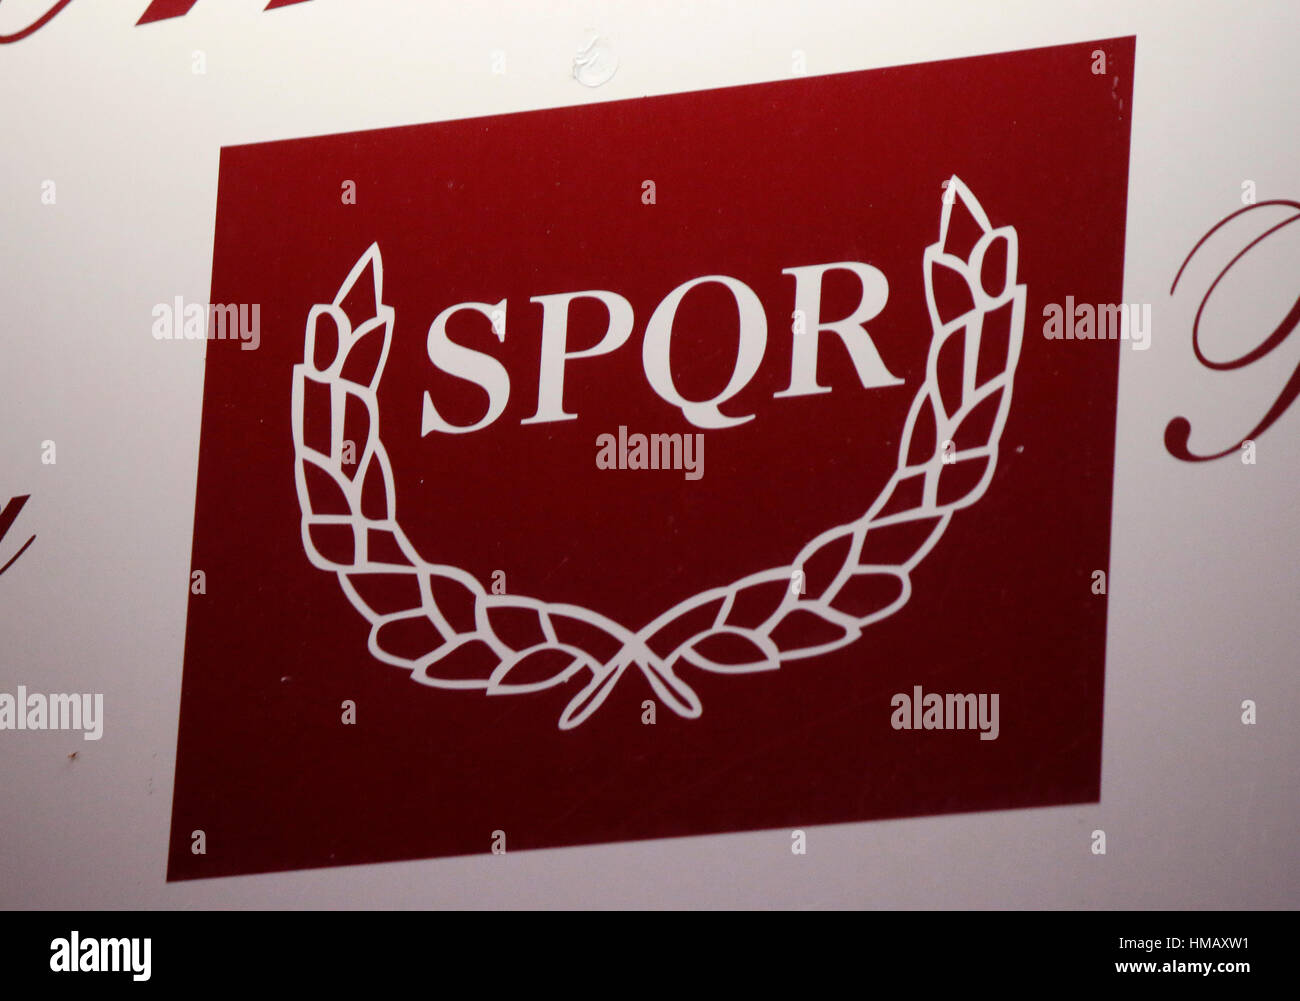 das Logo der Marke "SPQR", Berlin. Stock Photo